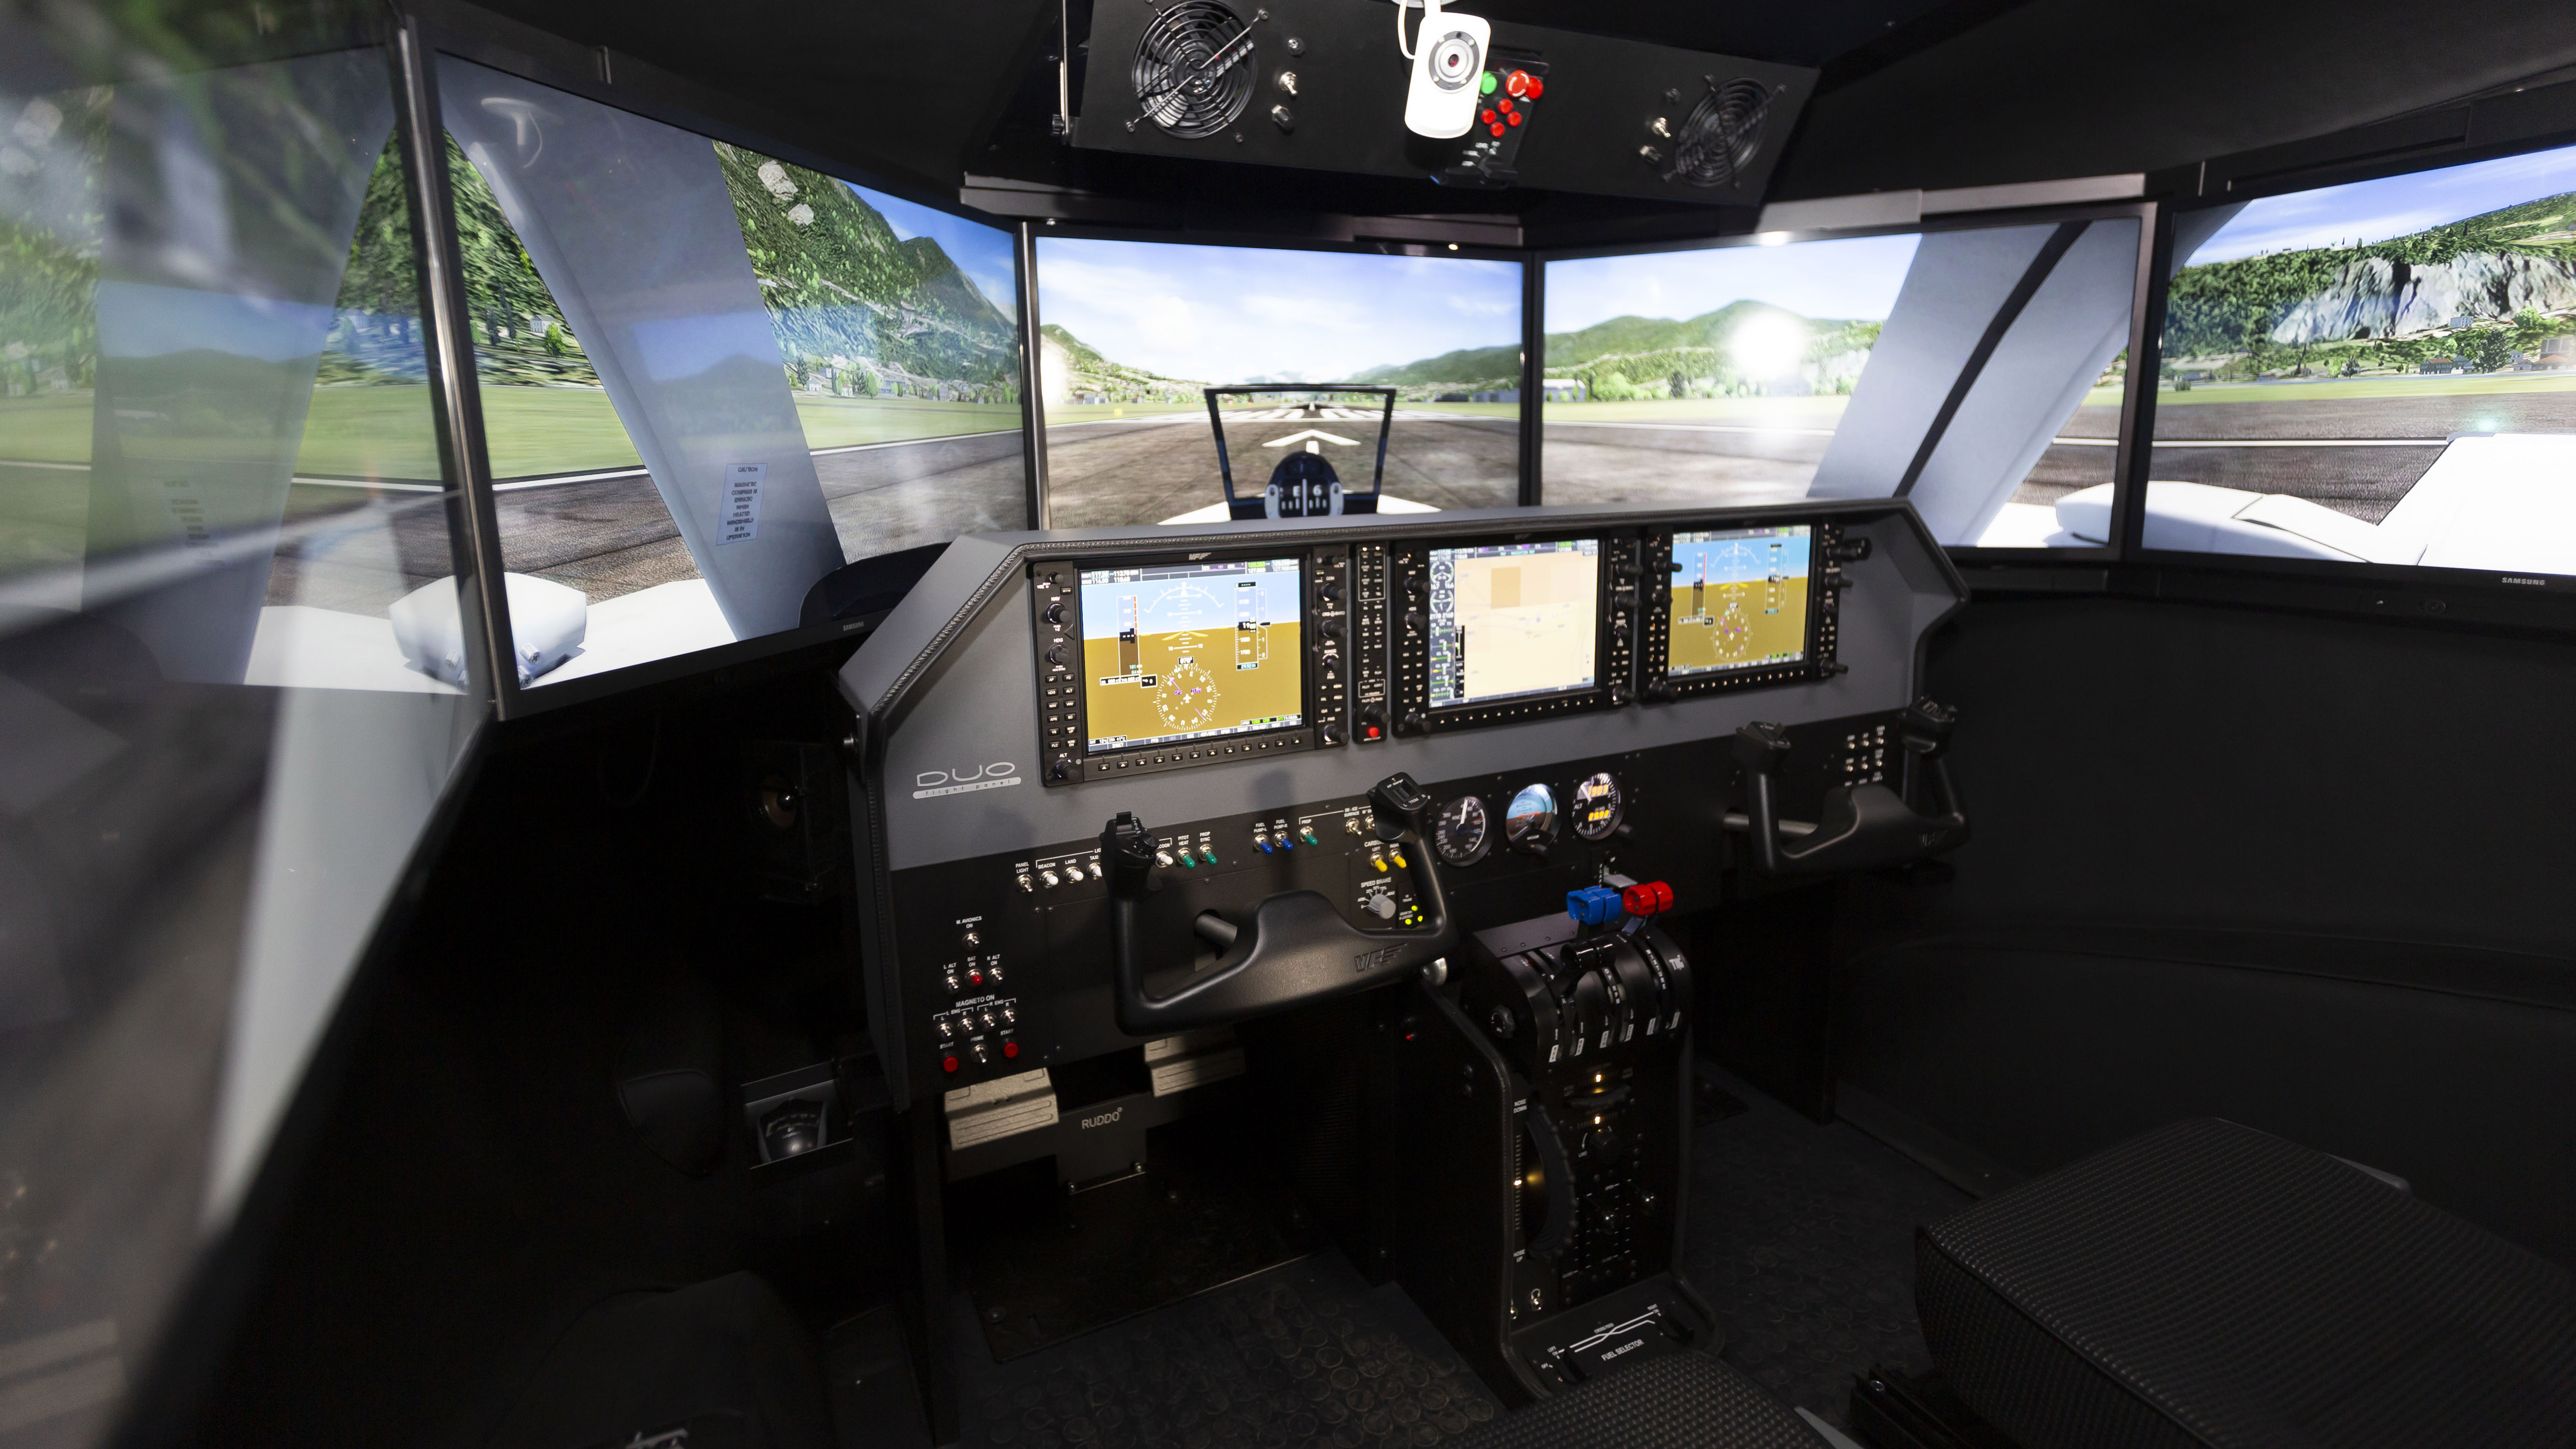 building flight simulator pc